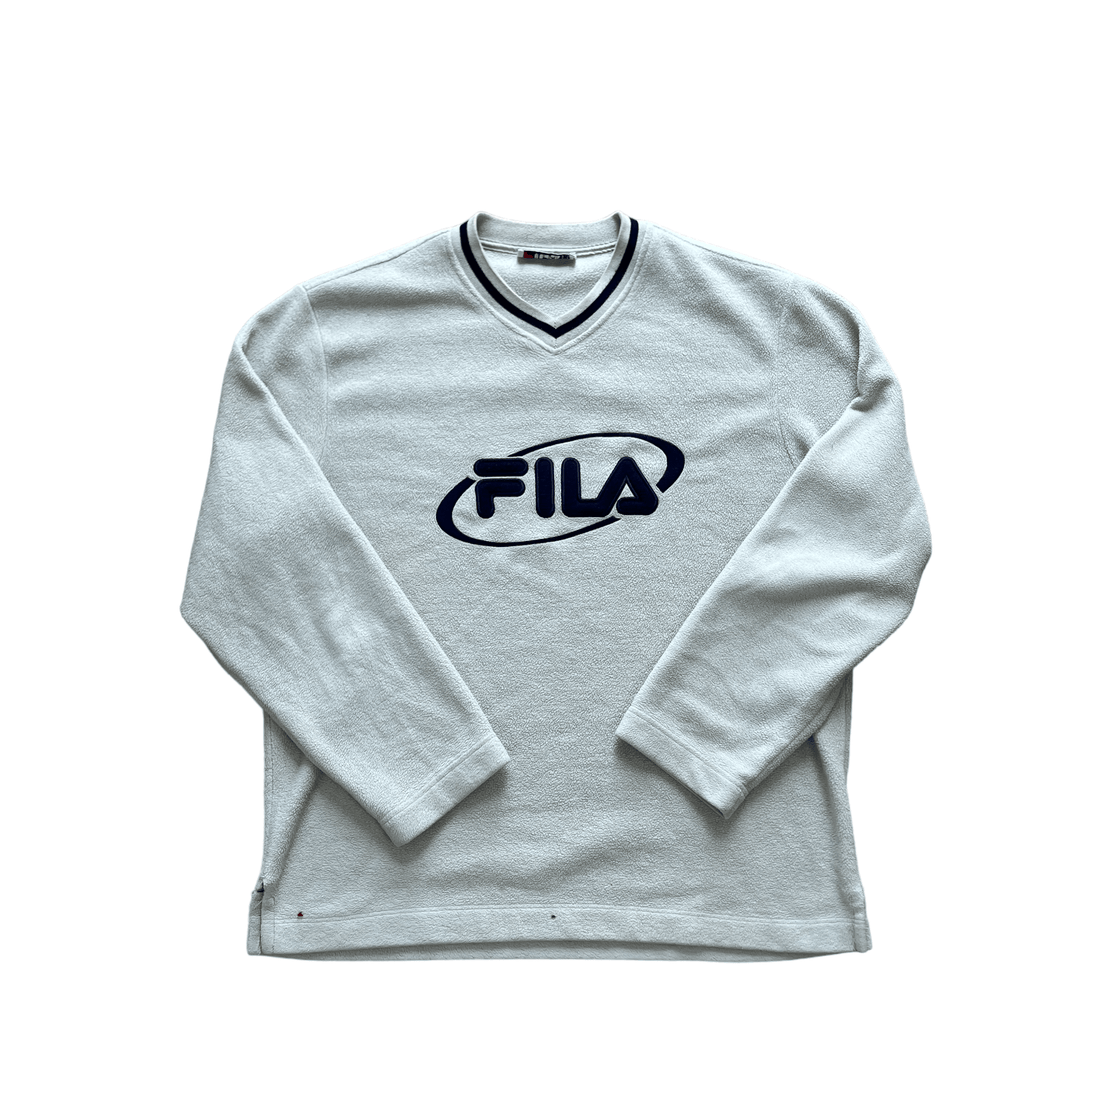 Vintage Cream Fila Fleece Sweatshirt - Large - The Streetwear Studio